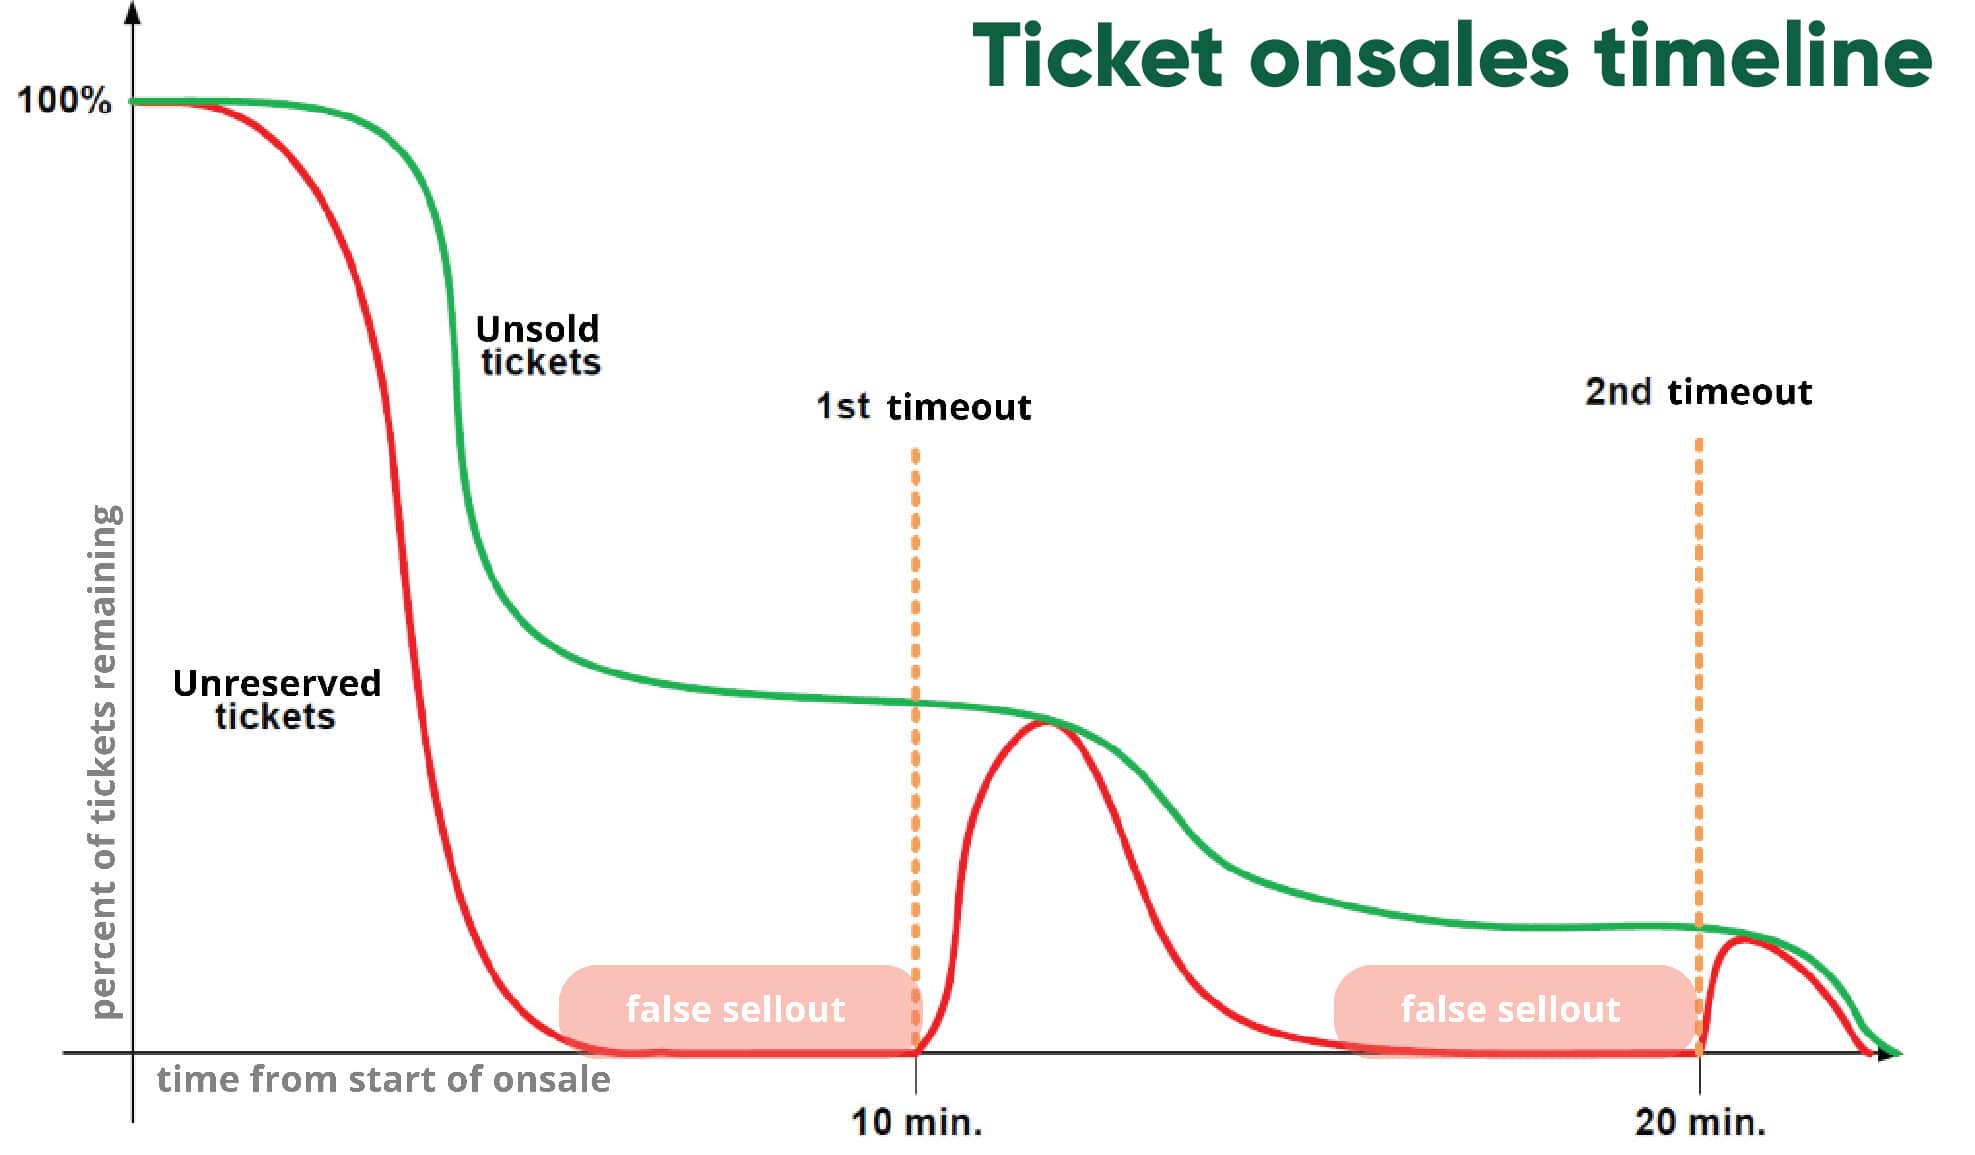 Ticket onsales timeline